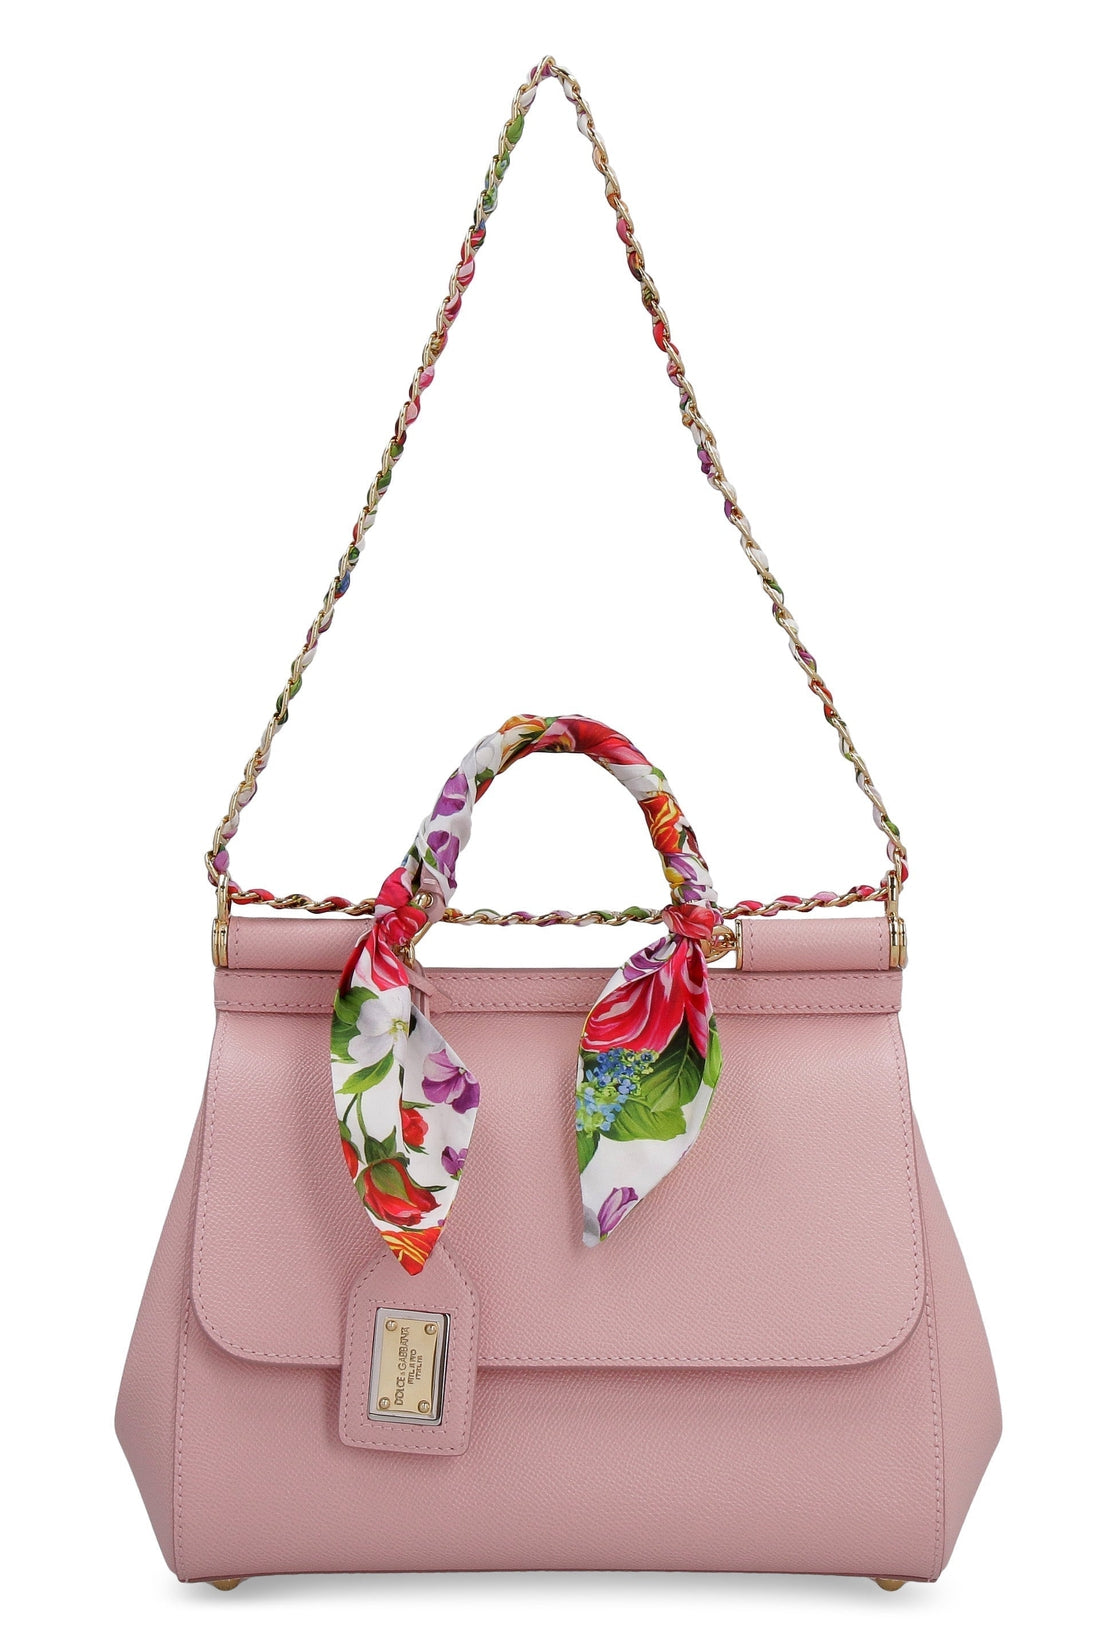 Dolce & Gabbana-OUTLET-SALE-Sicily leather handbag-ARCHIVIST